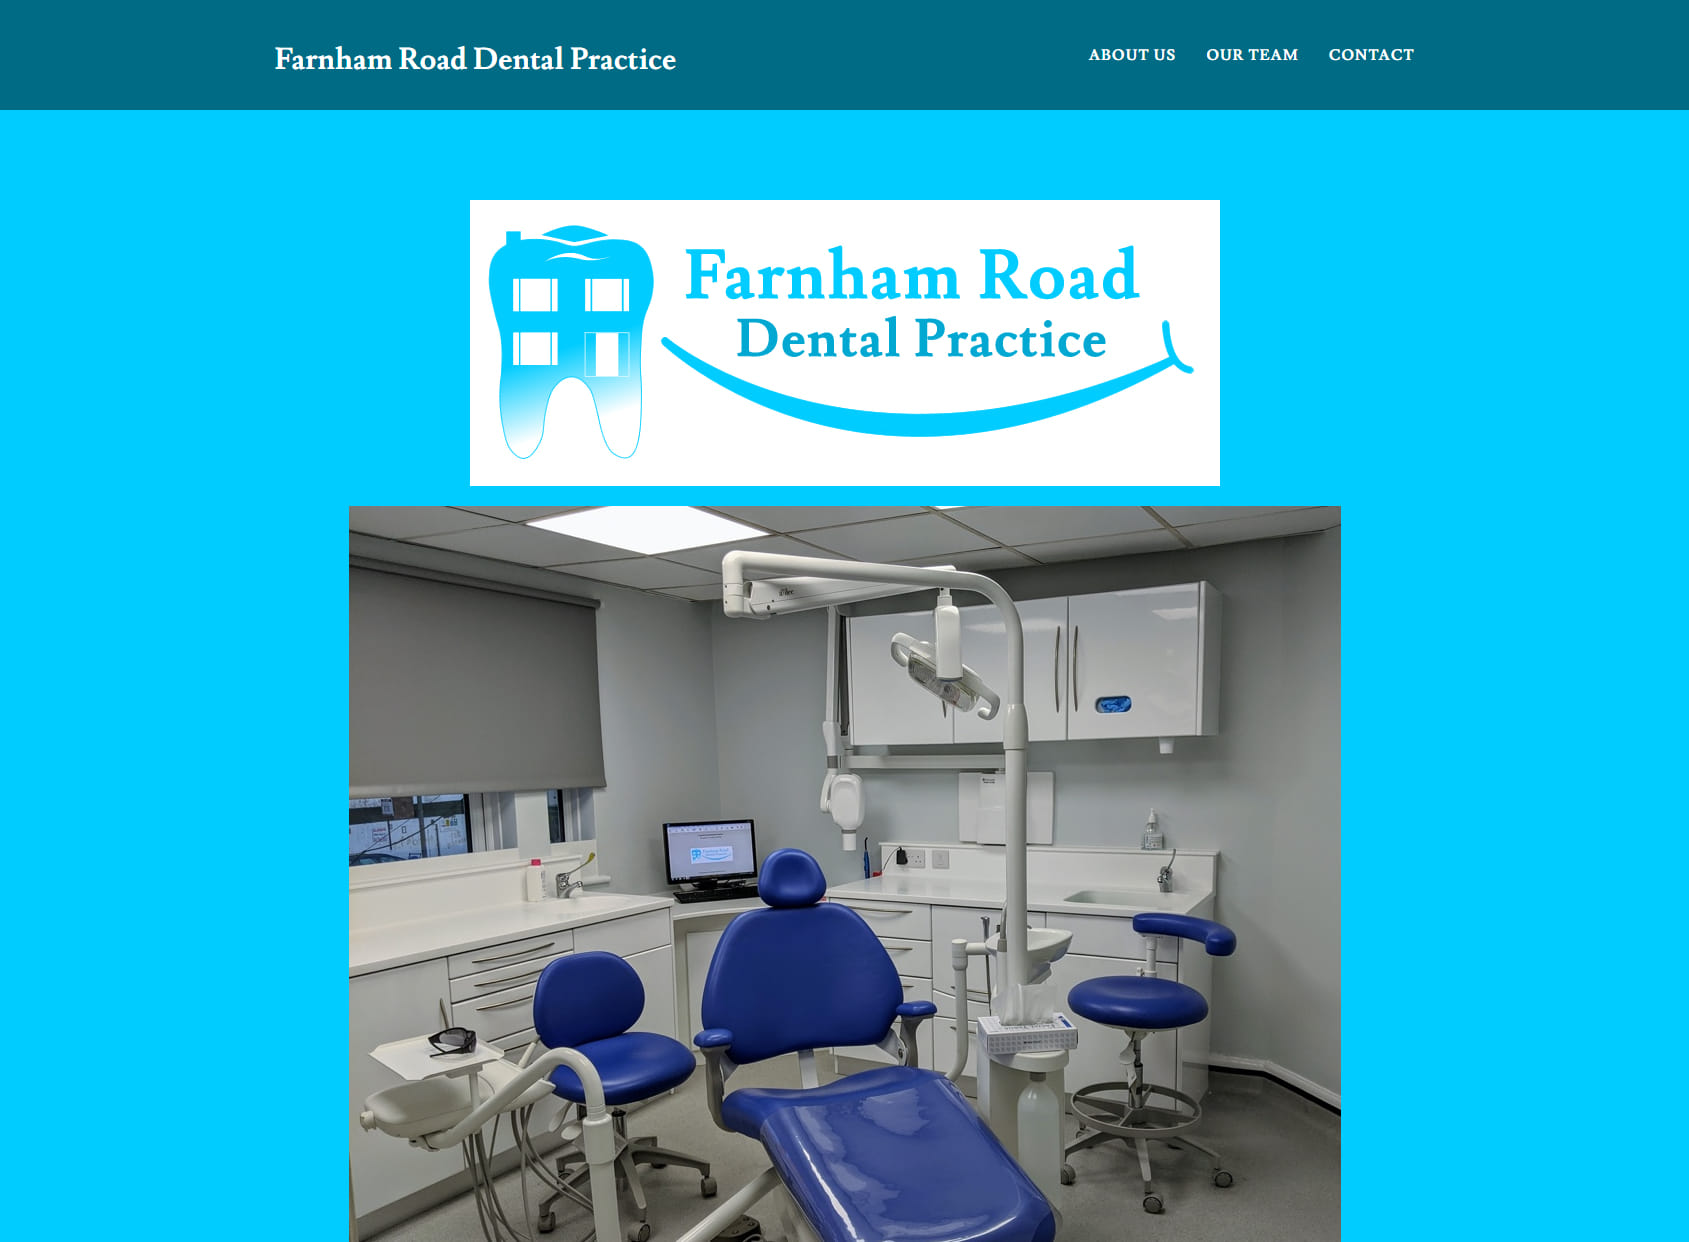 Farnham Road Dental Practice